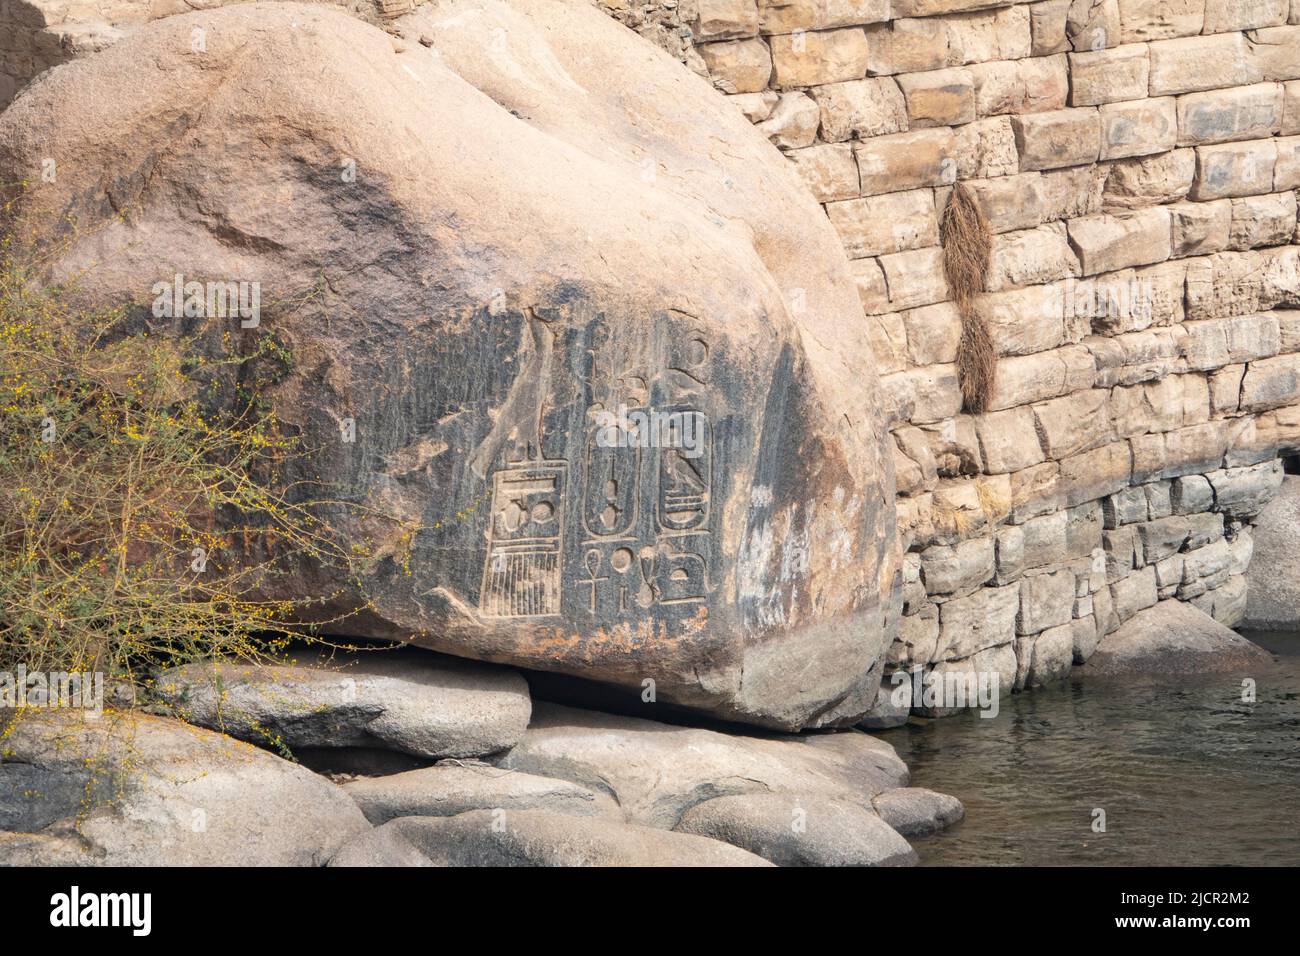 Granite boulders with pharaonic inscriptions, Aswan, Egypt Stock Photo